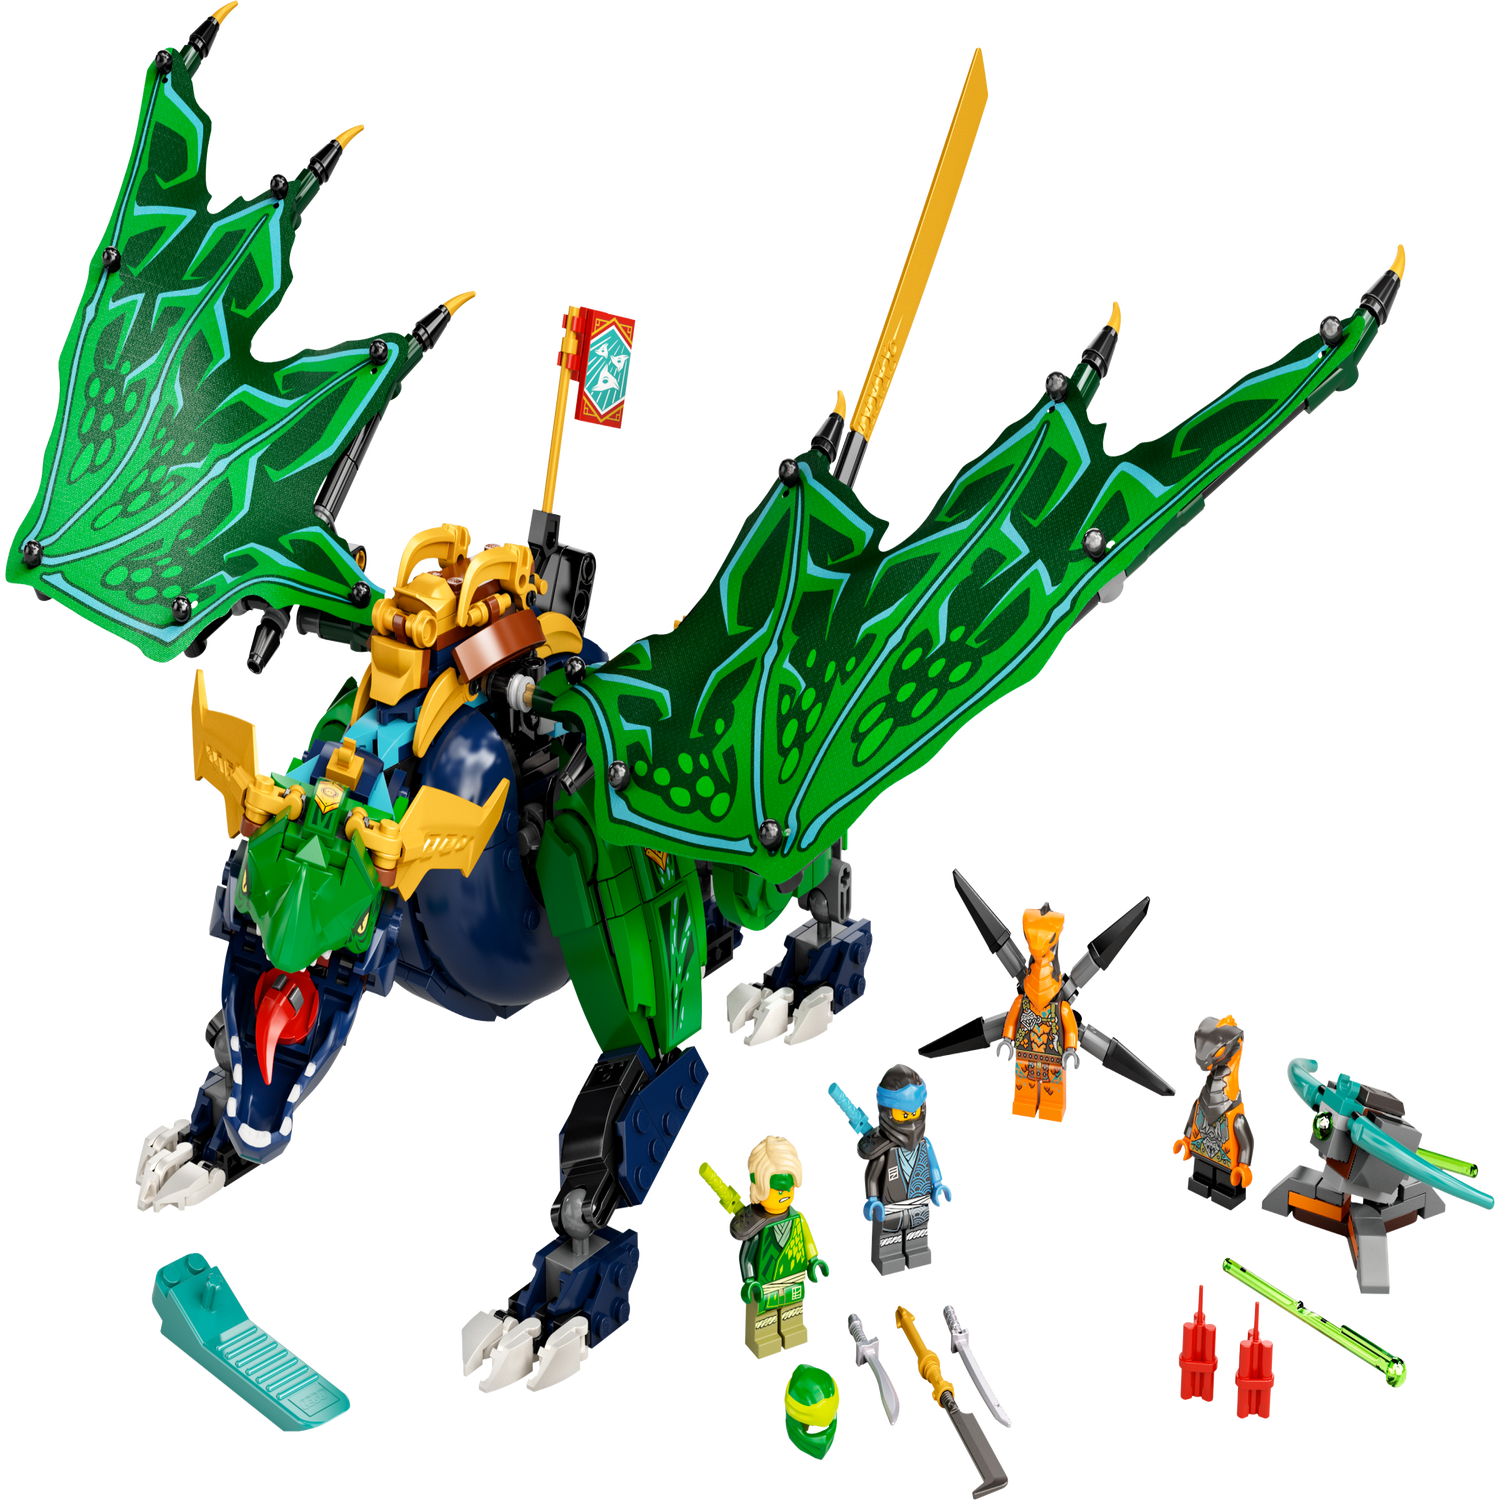 LEGO Ninjago Movie Minifigure - Lloyd with Blue Ninja Armor and Hair - wide 4